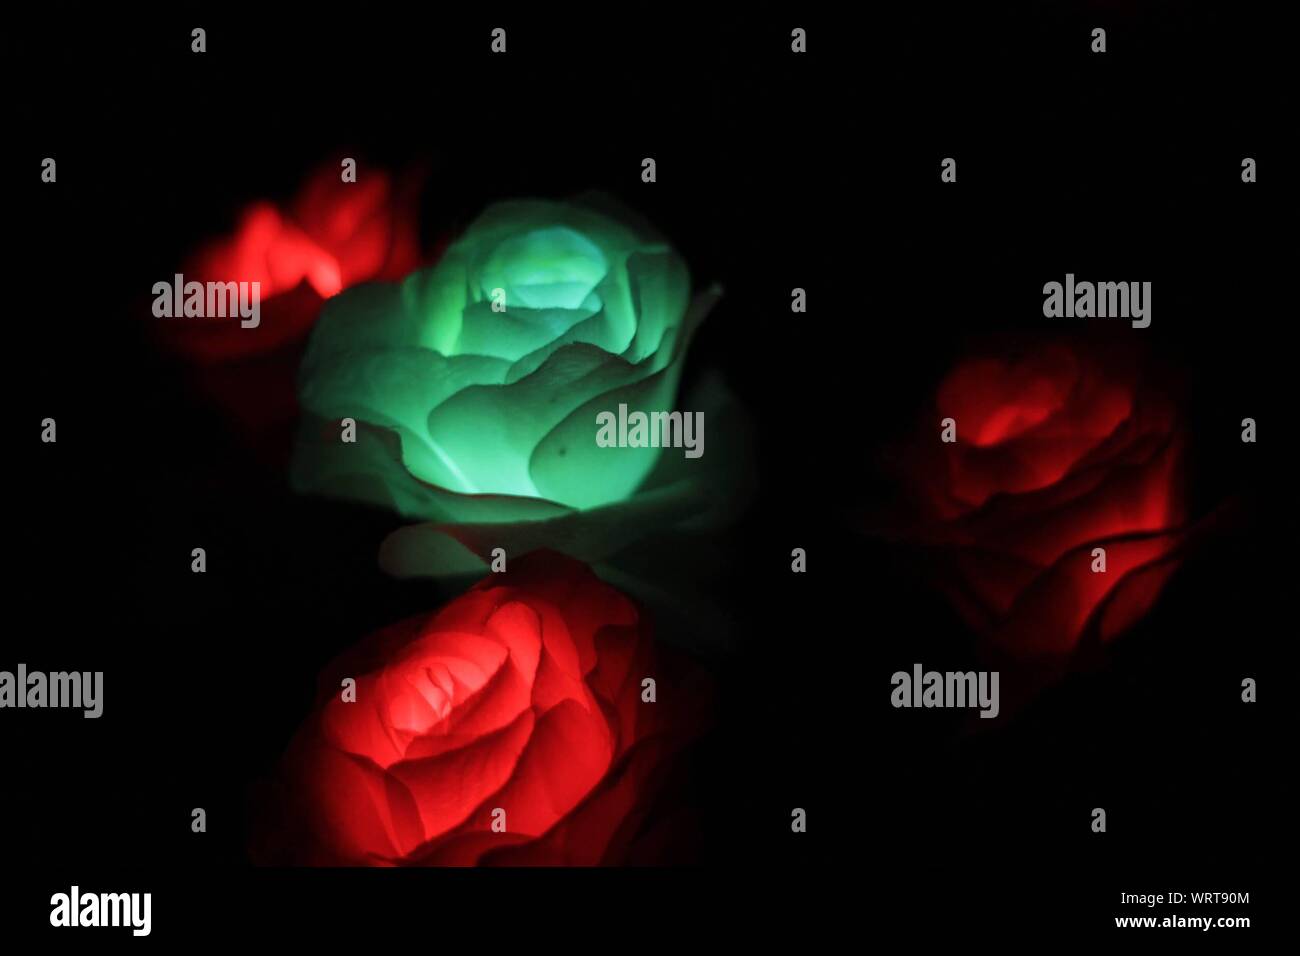 Rosas iluminadas fotografías e imágenes de alta resolución - Alamy